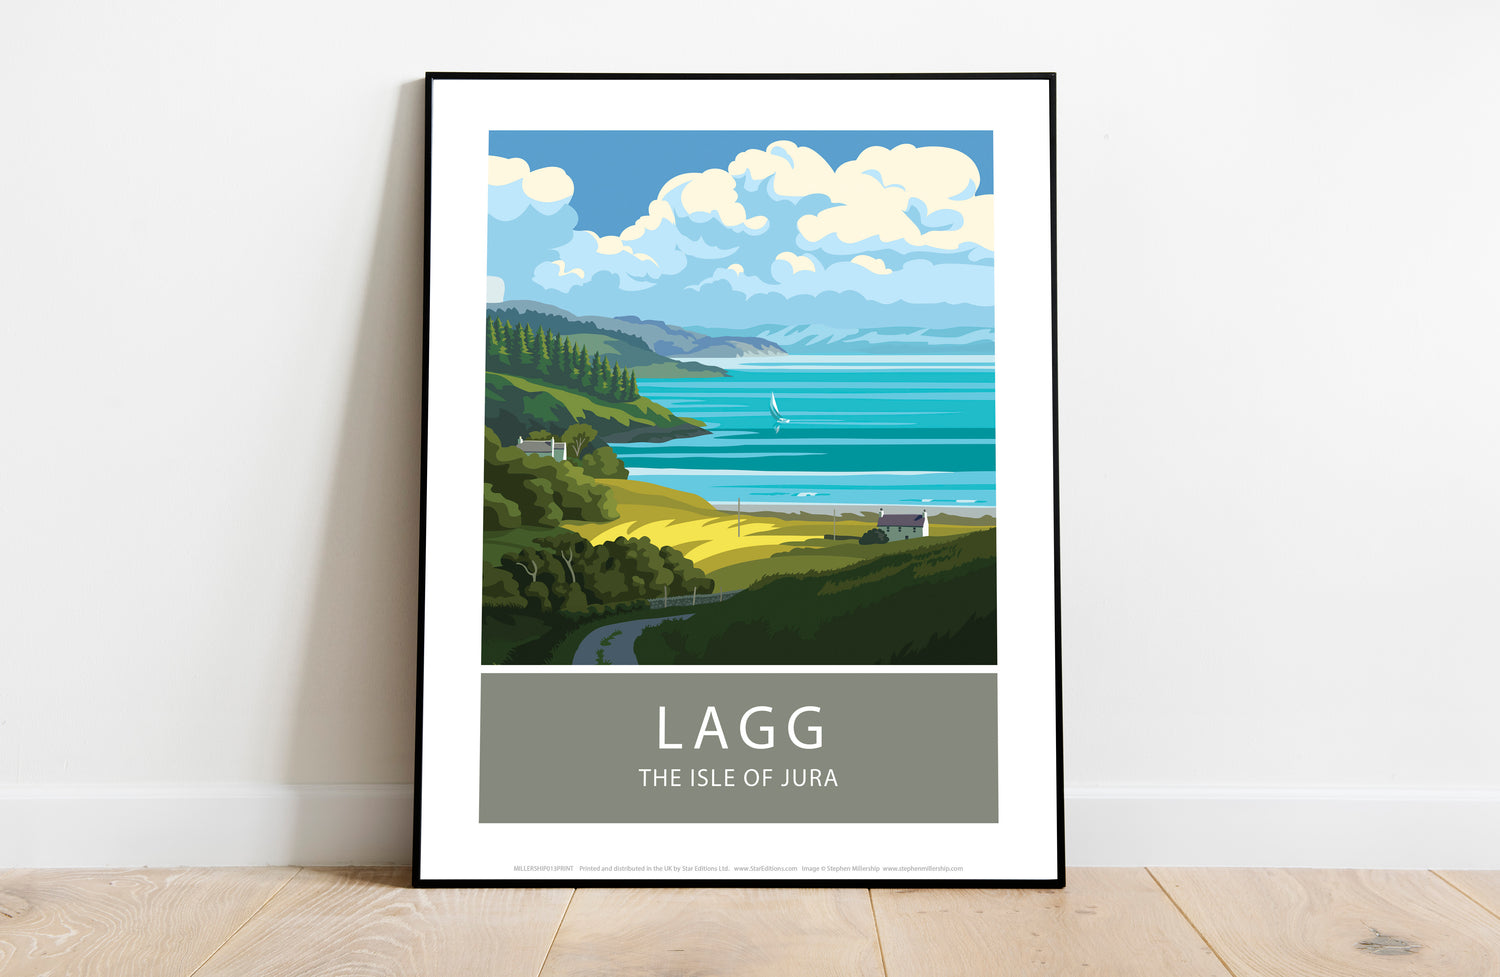 Lagg, The Isle of Jura, Scotland - Art Print